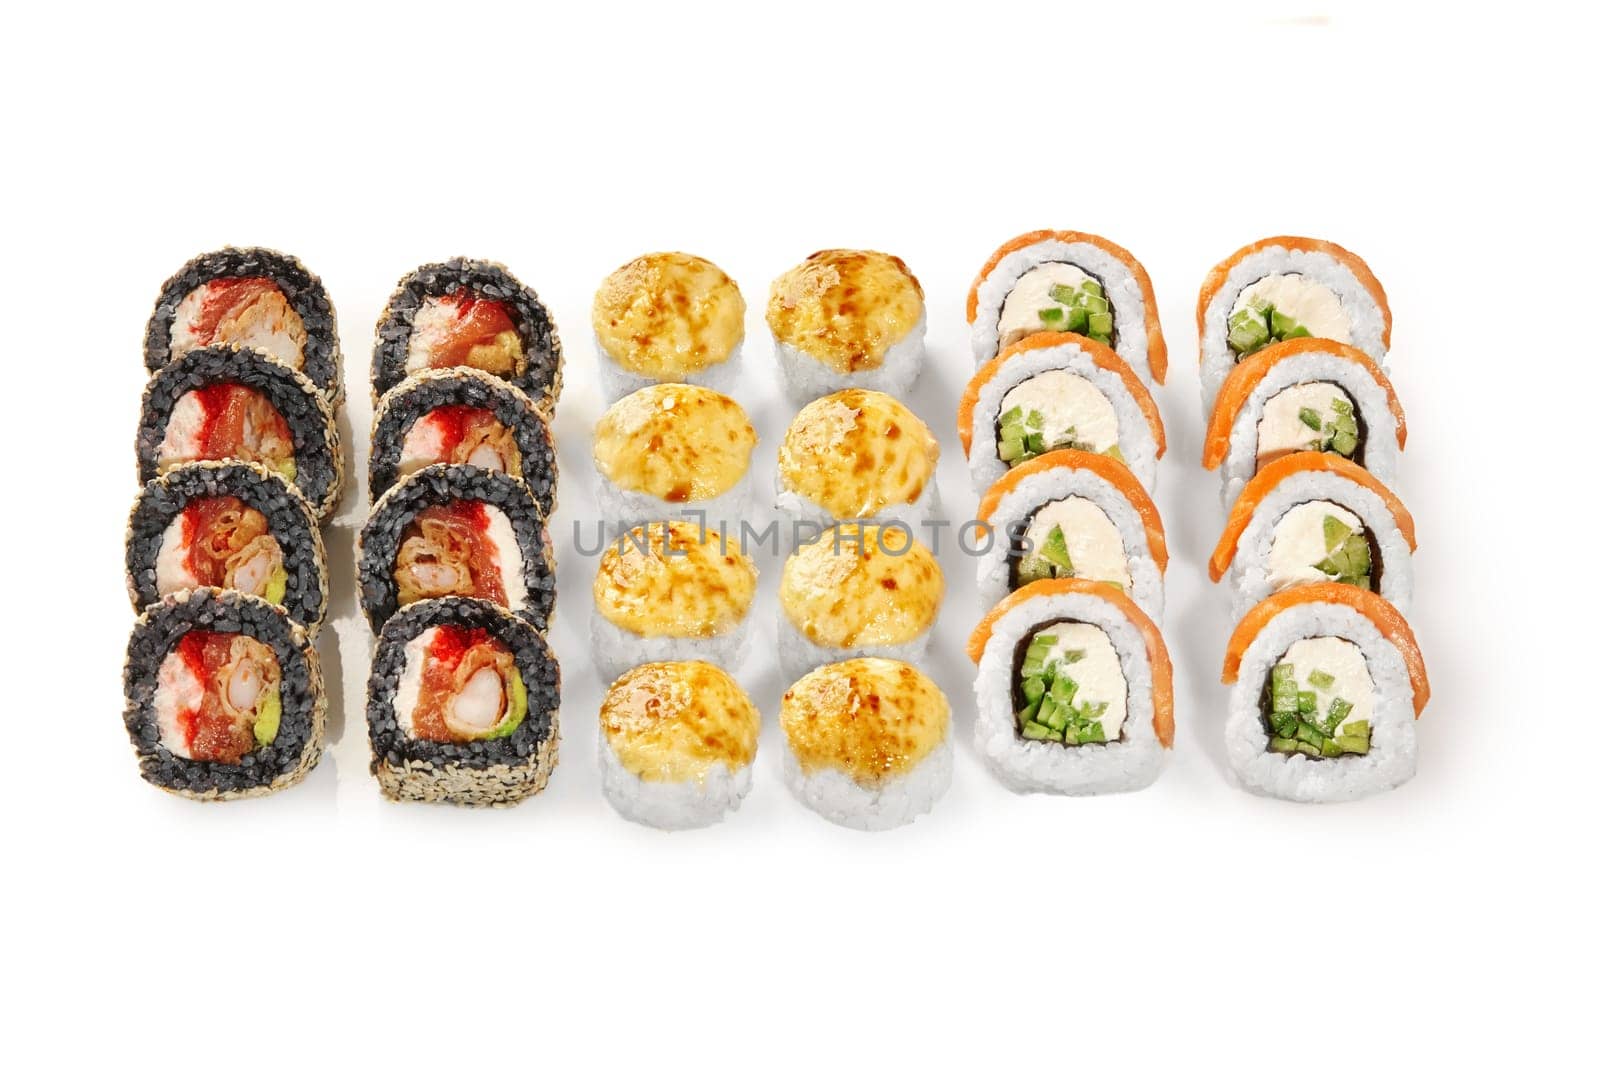 Inviting set of sushi rolls including cheese-baked sushi, shrimp-filled black rice uramaki, and classic salmon Philadelphia rolls, against white background. Japanese cuisine